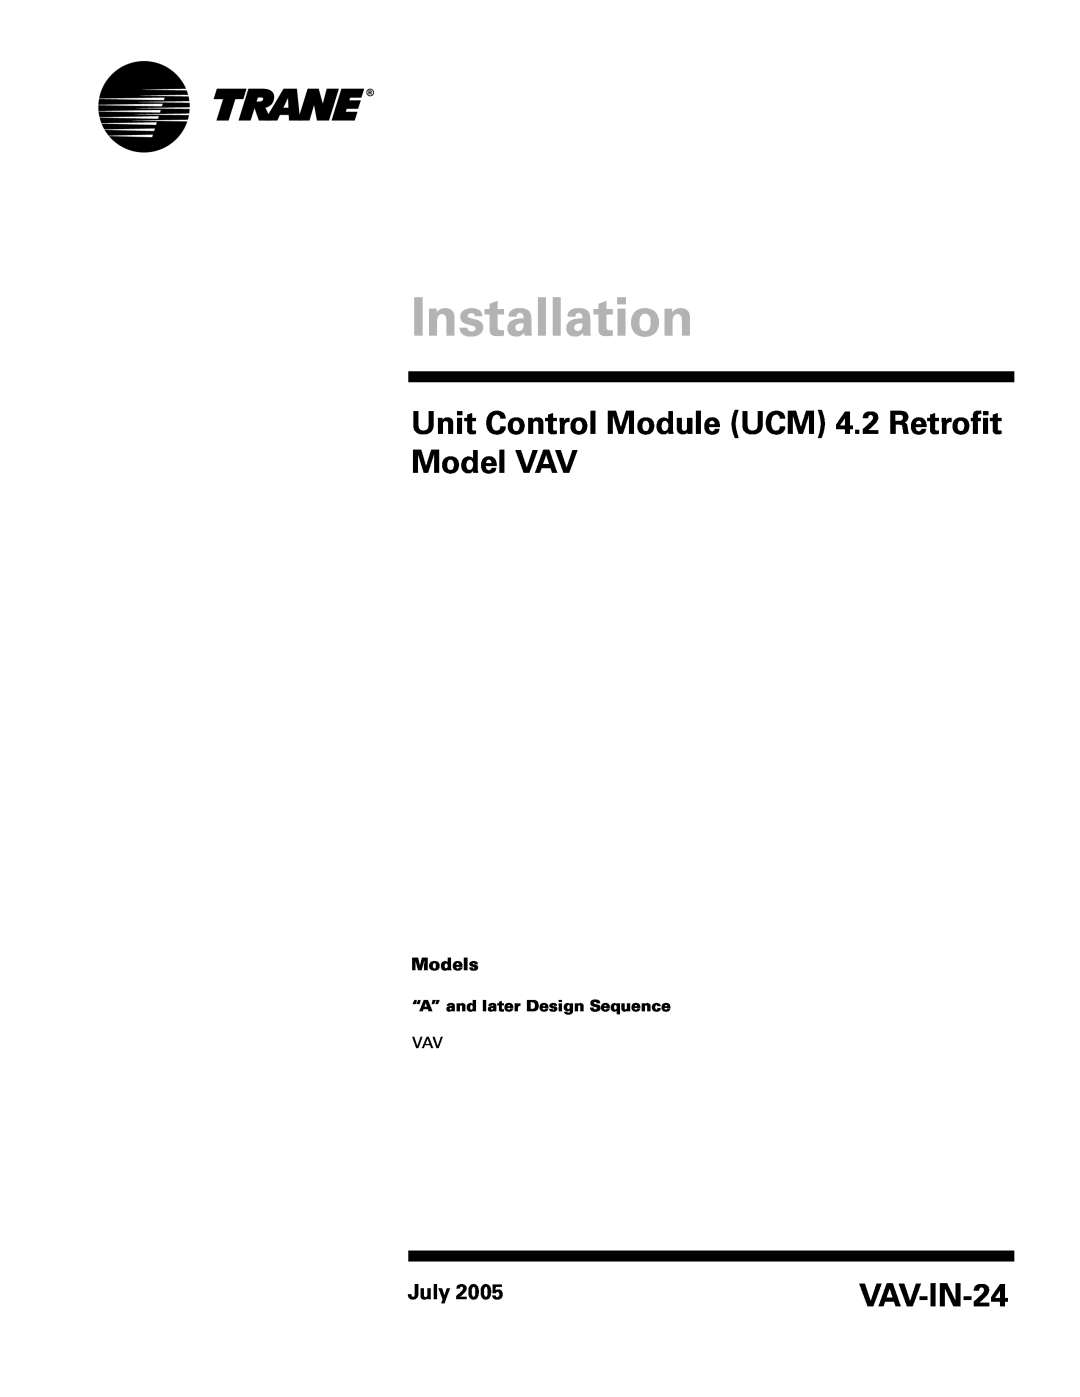 Trane Unit Control Module (UCM) 4.2 Retrofit Model VAV manual Installation, Unit Control Module UCM 4.2 Retrofit Model VAV 